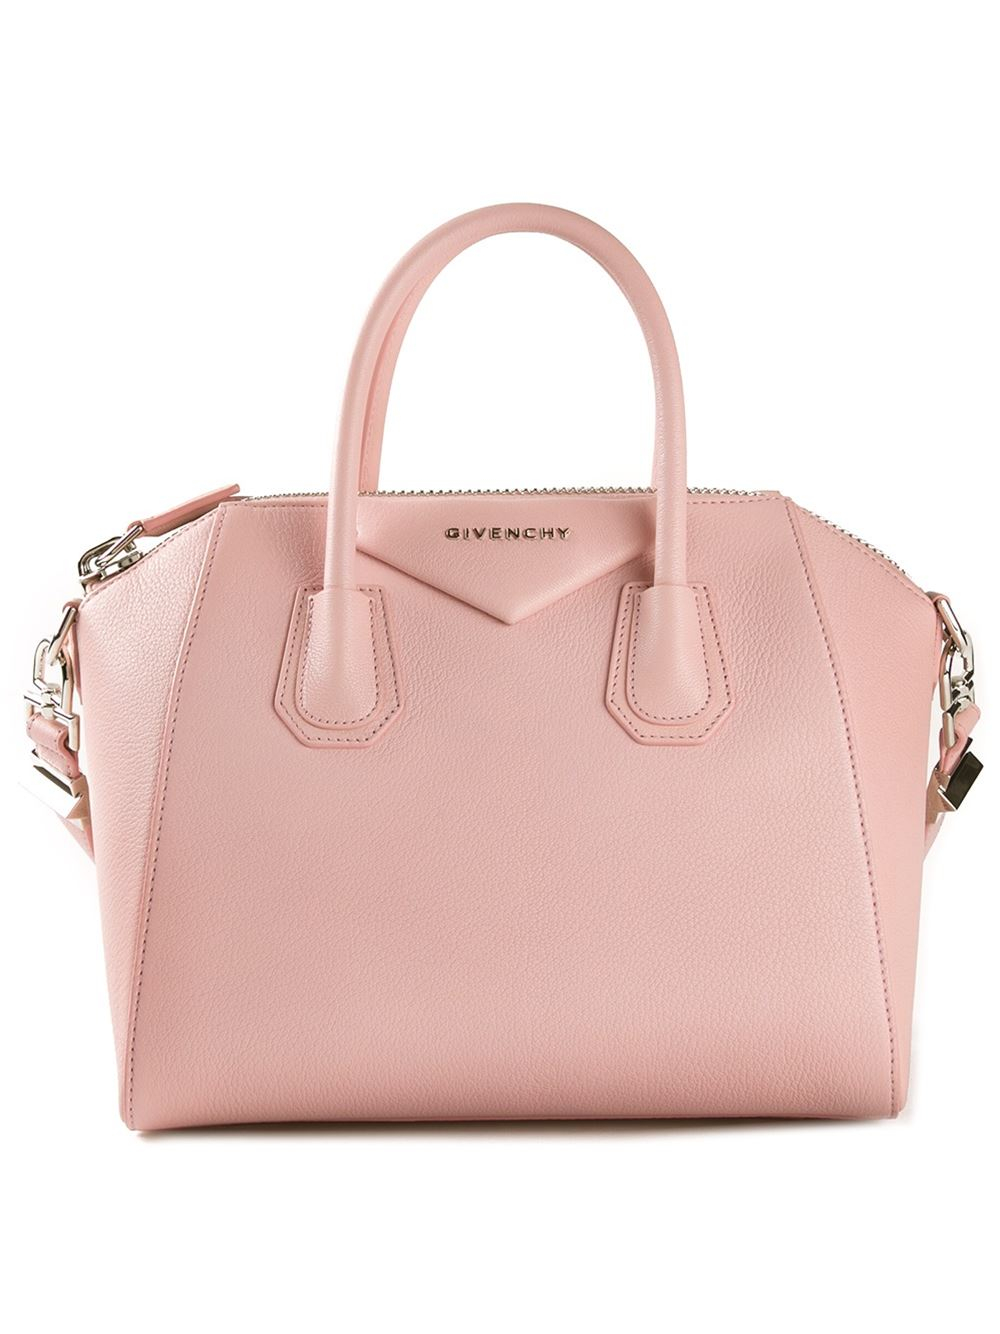 Givenchy Small Antigona Bag in Pink - Lyst